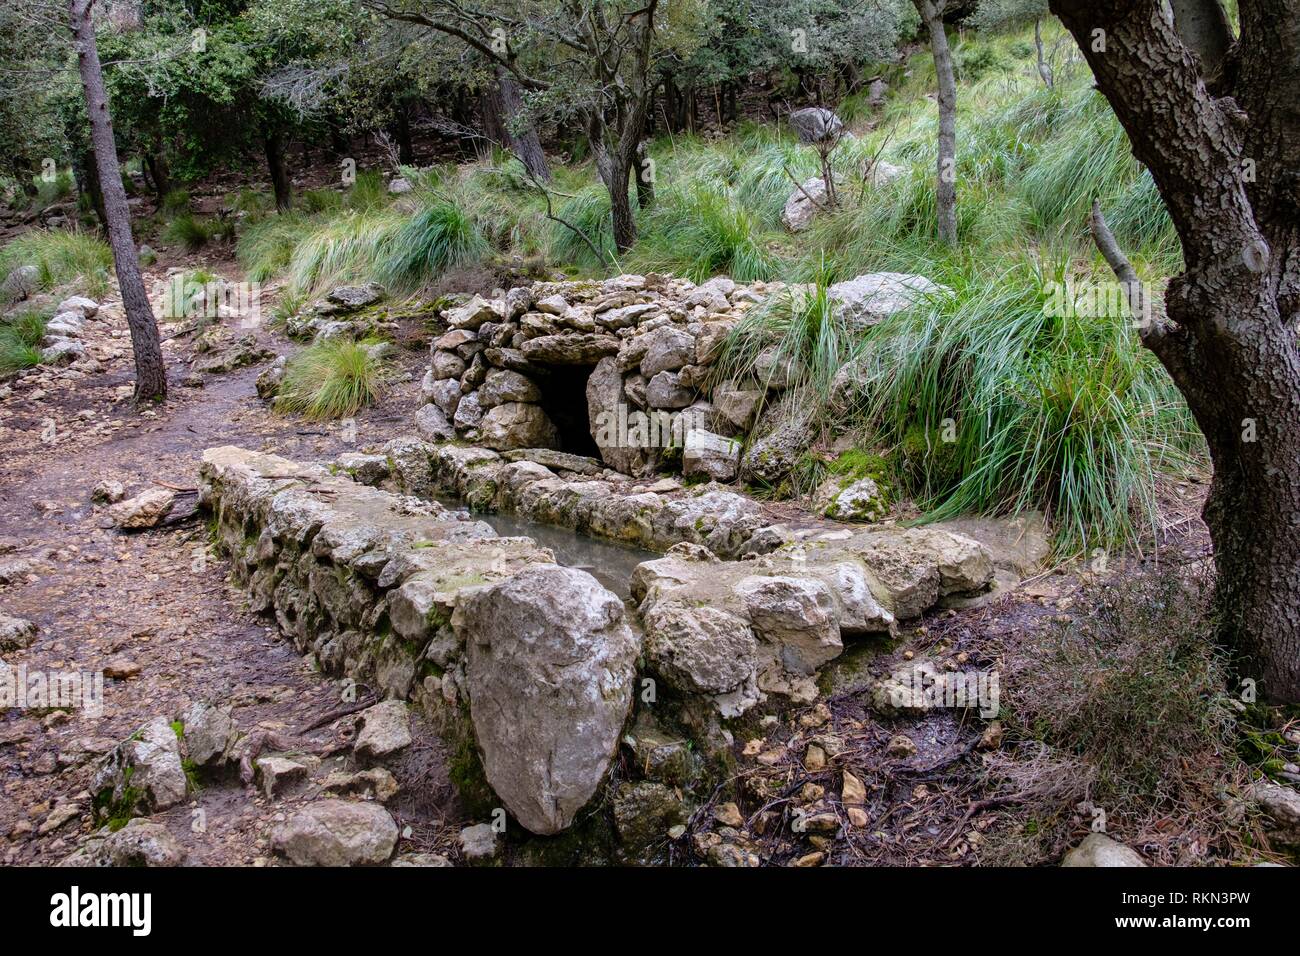 Fuente de ses lanza den la Gallina, Escorca, paraje natural de la Serra de Tramuntana, Mallorca, Islas Baleares, España. Foto de stock